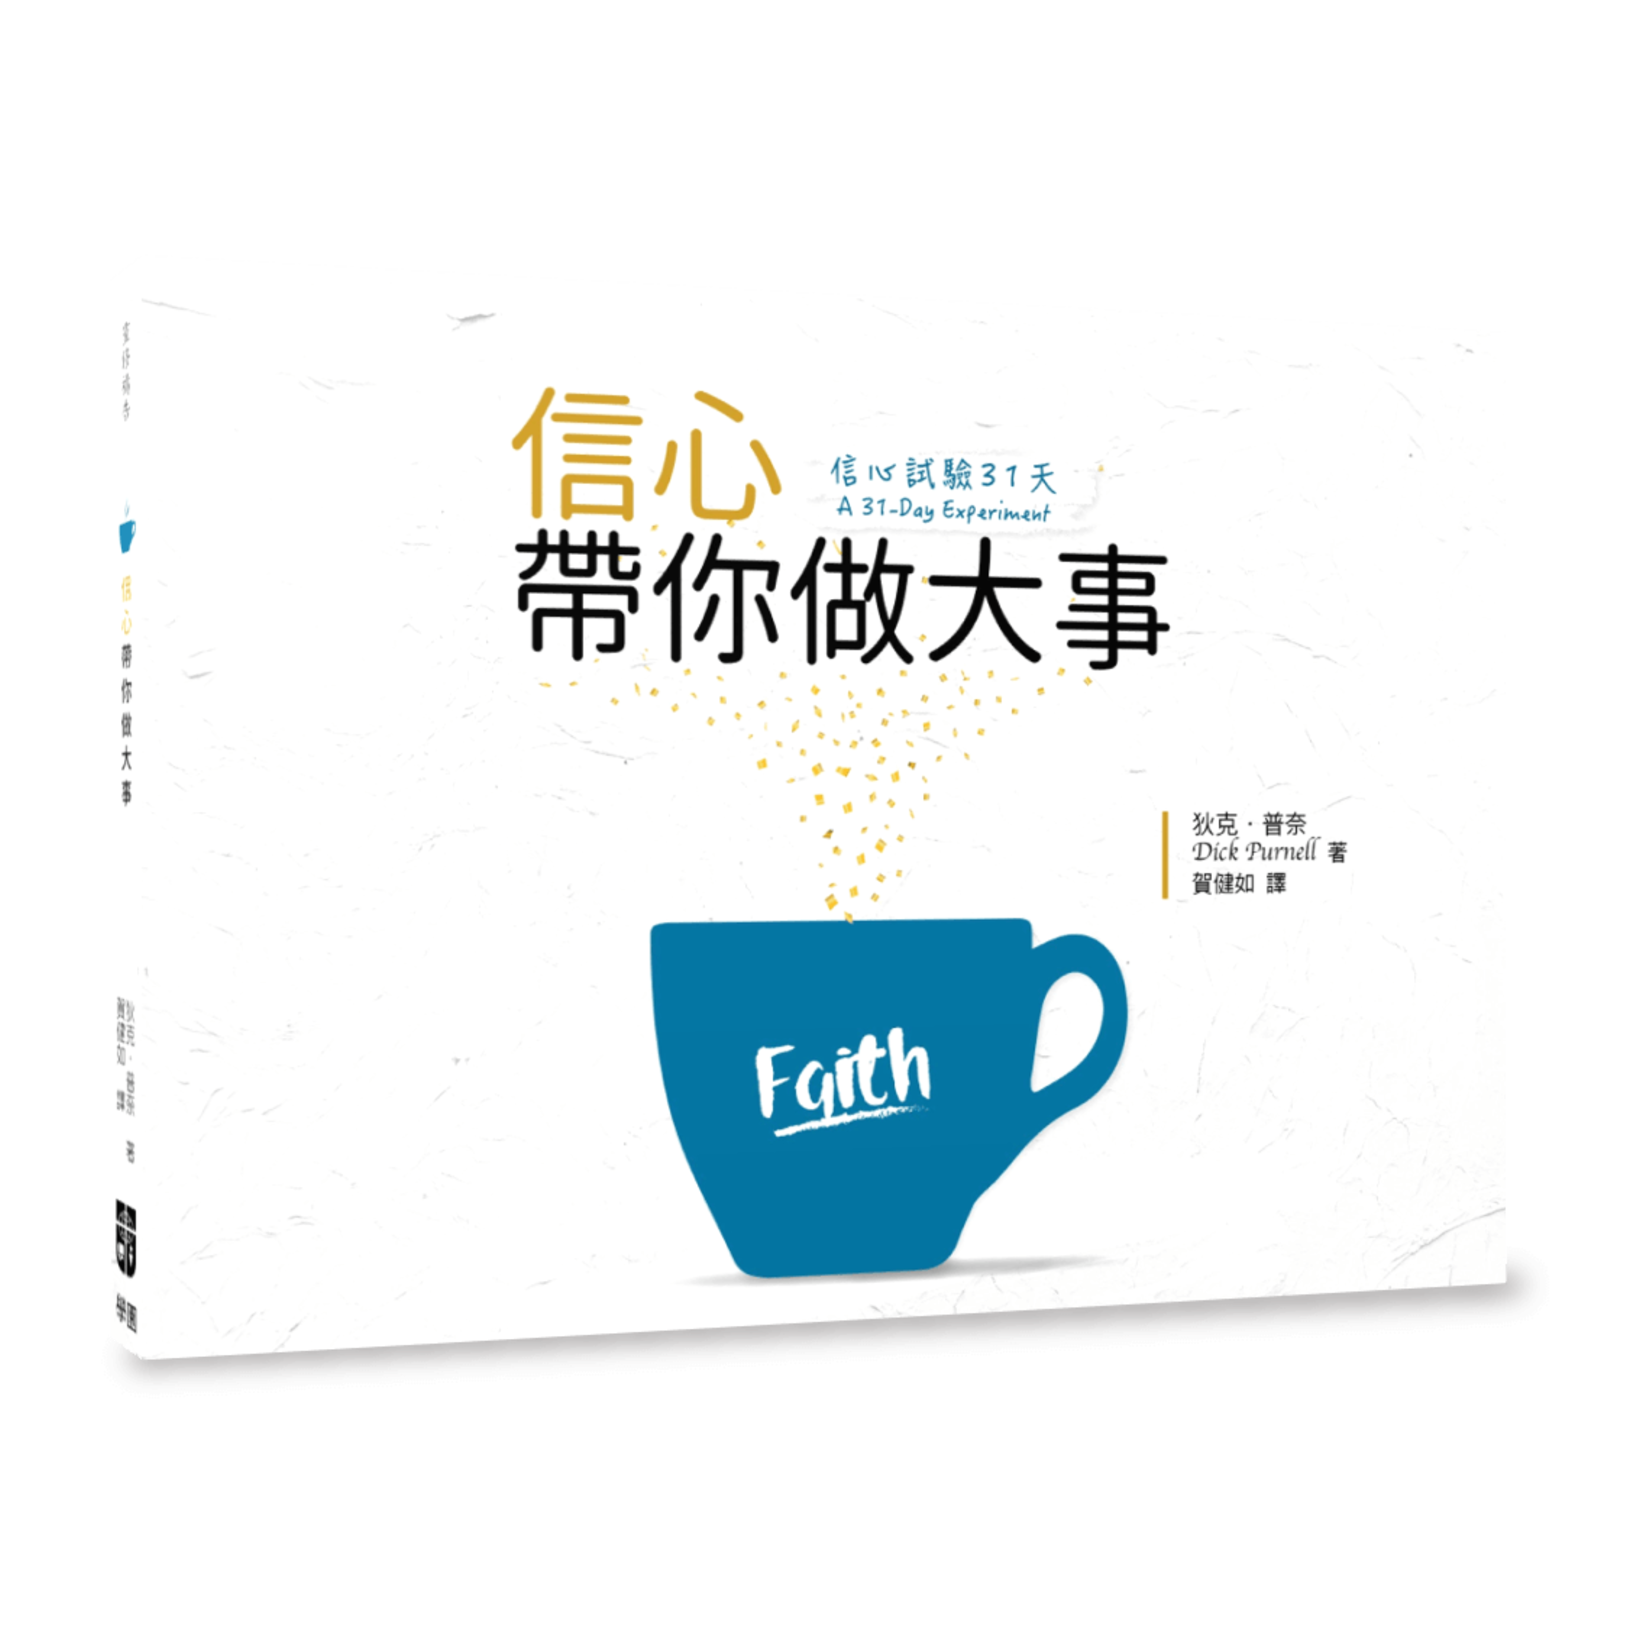 中國學園傳道會 Taiwan Campus Crusade for Christ 信心試驗31天：信心帶你做大事 A 31-Day Experiment: A Personal Experiment In Faith Building